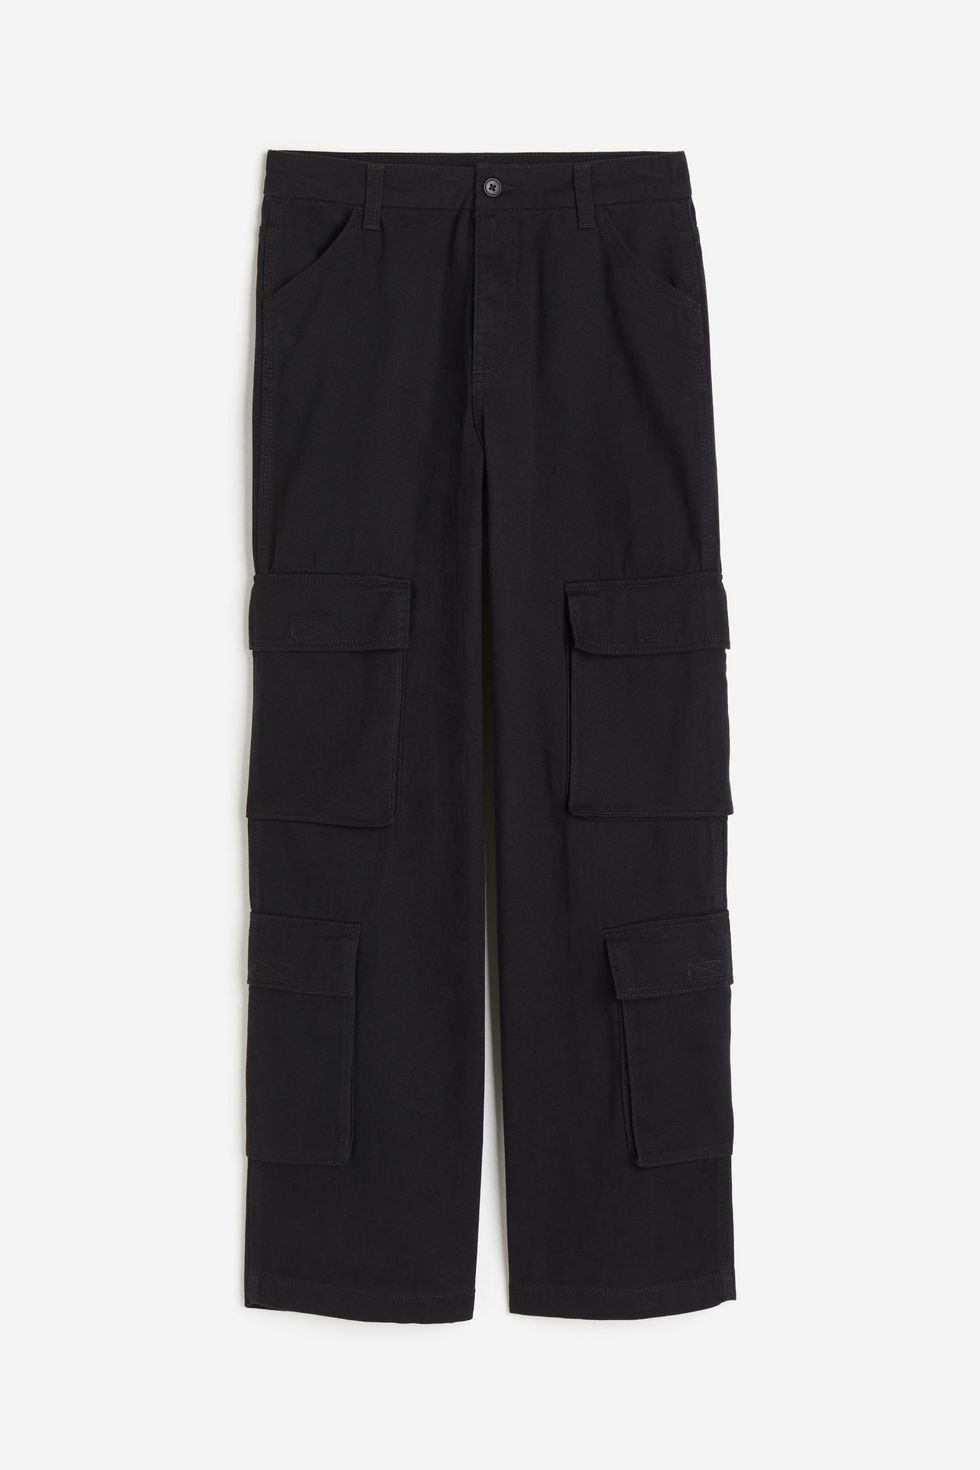 Pantaloni cargo neri in twill, H&M